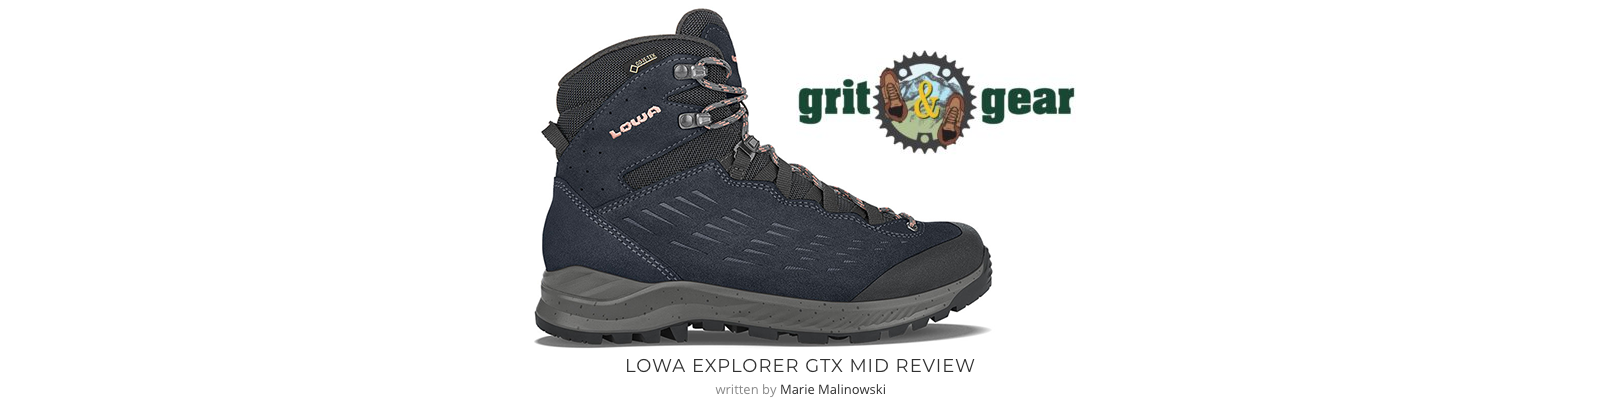 lowa lightweight hiking boots